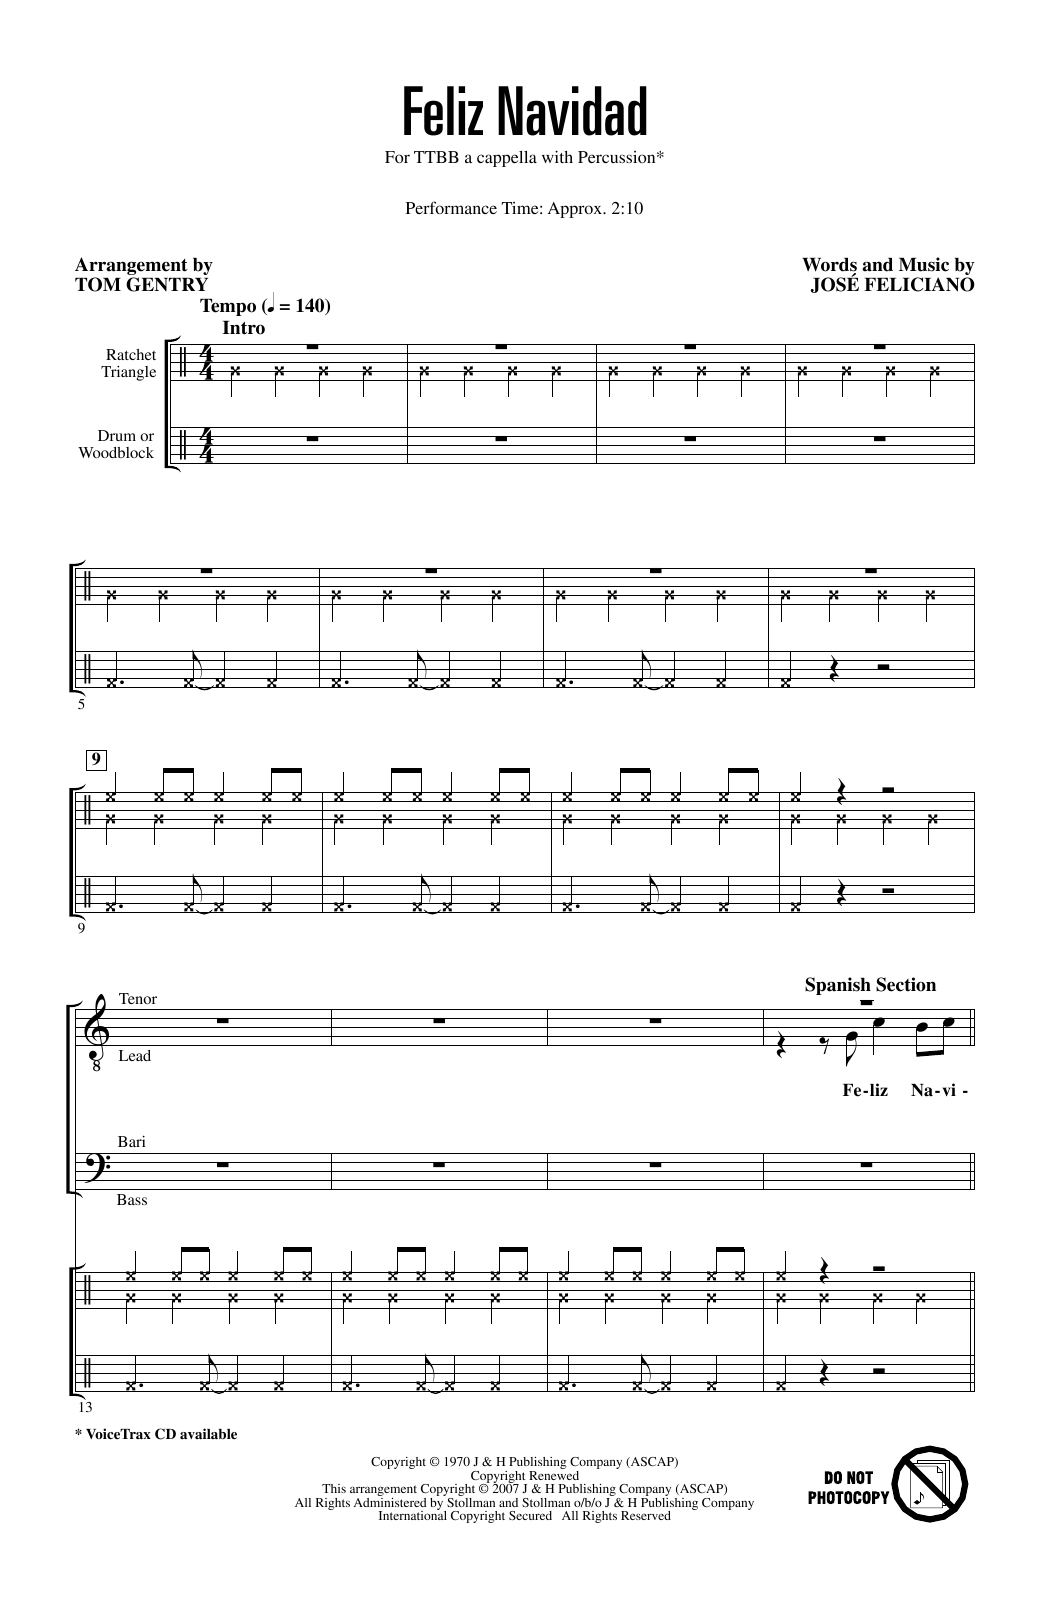 Download Jose Feliciano Feliz Navidad (arr. Tom Gentry, David Briner) Sheet Music and learn how to play TTBB Choir PDF digital score in minutes